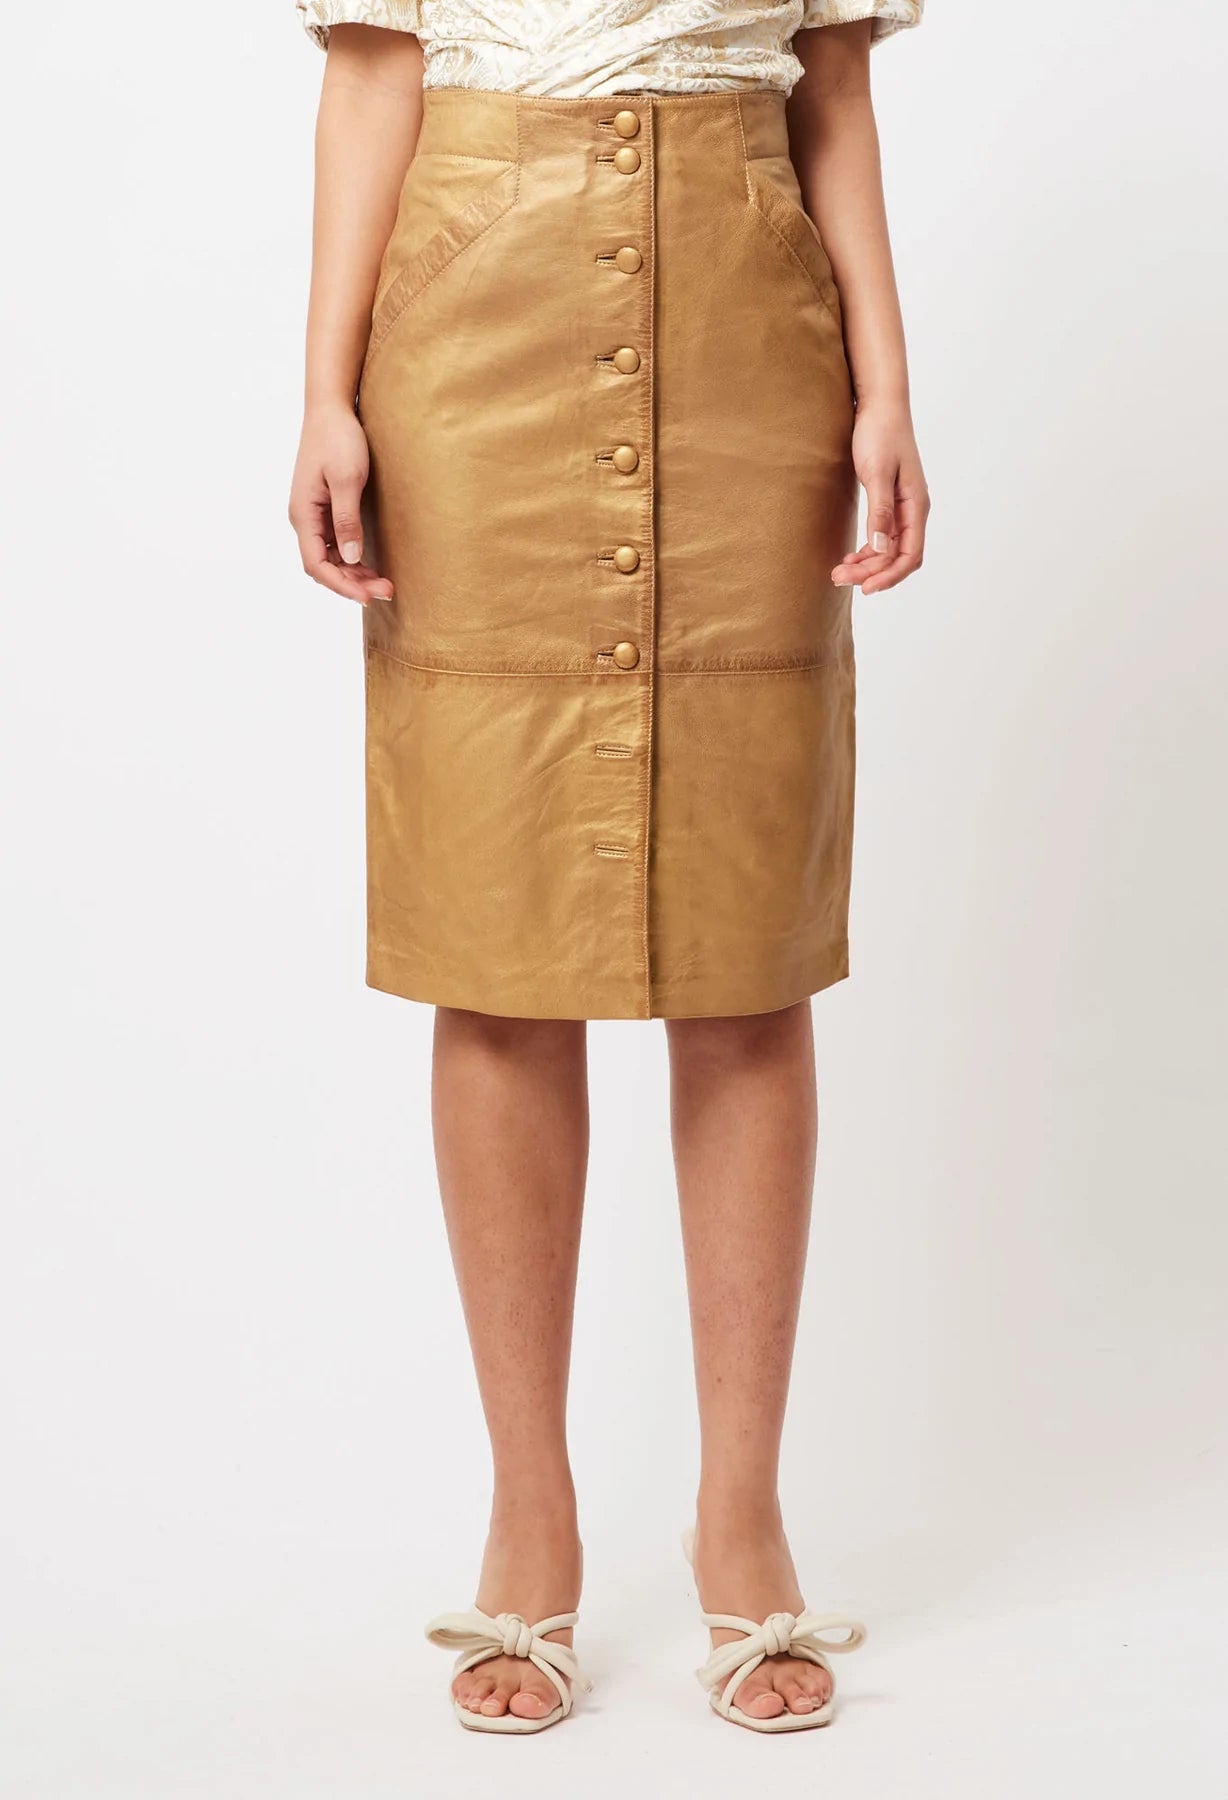 Shop Maya Leather Skirt │ Gold - ONCEWAS